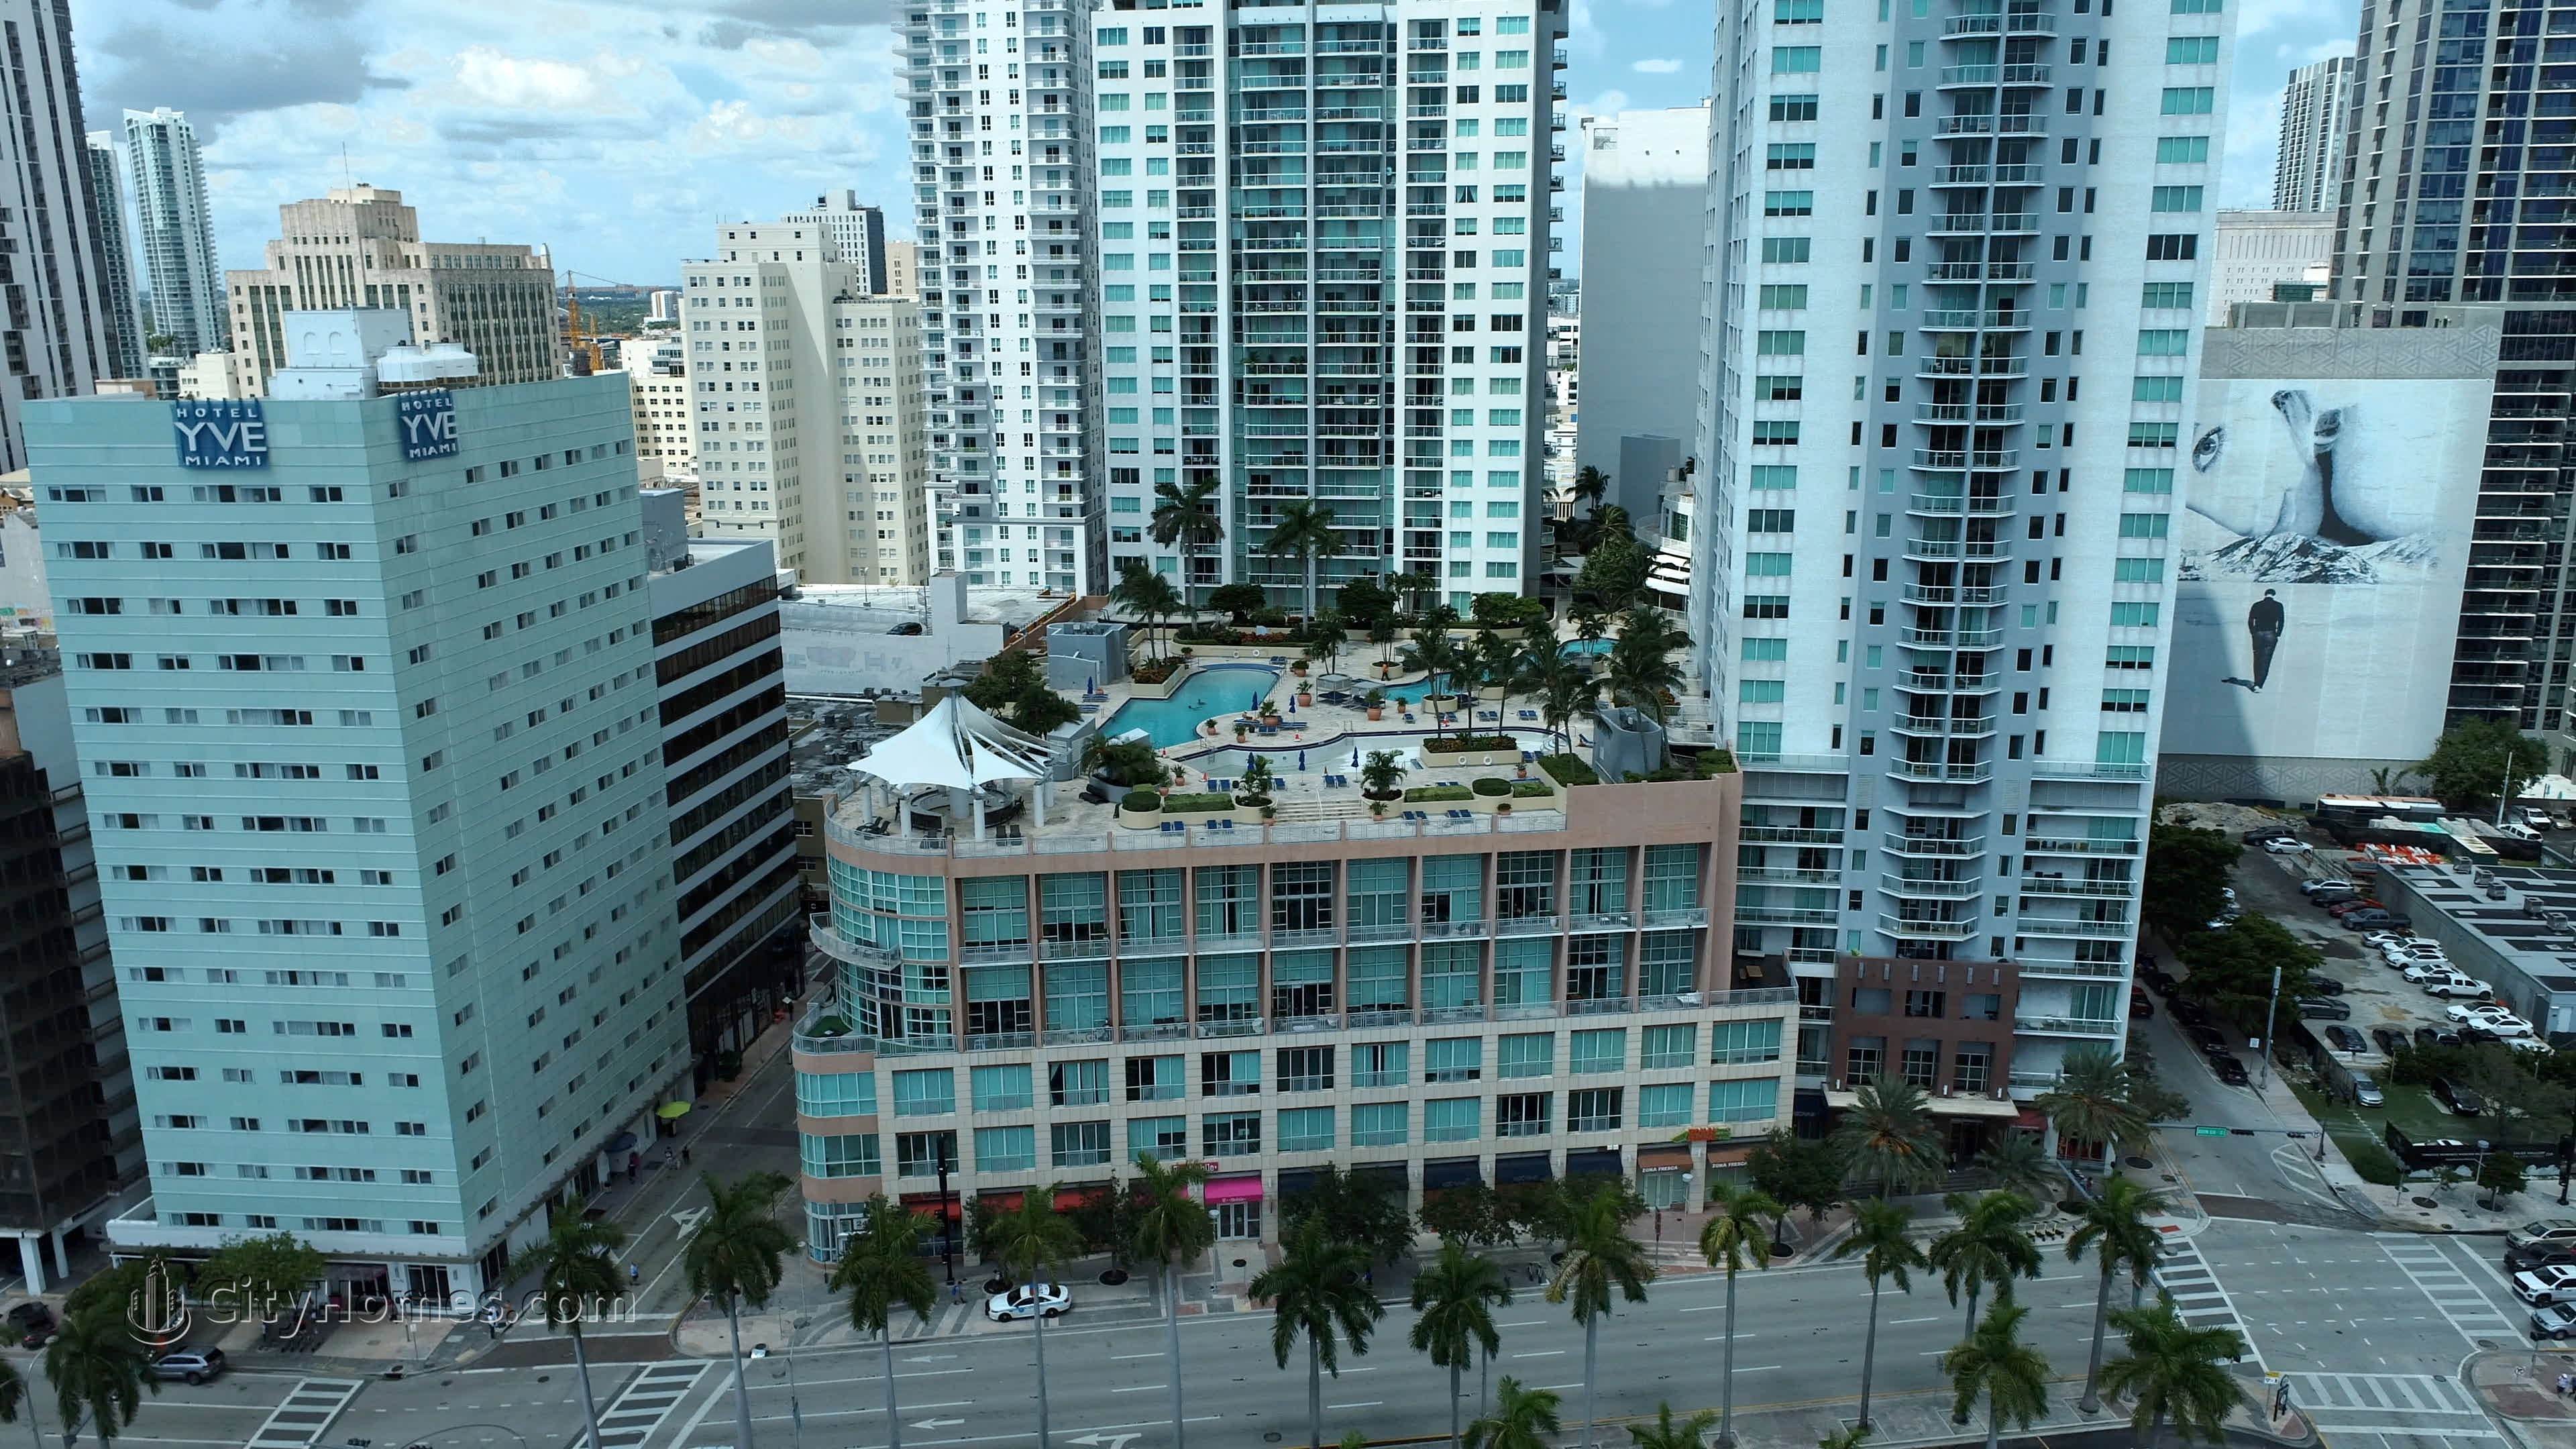 4. Vizcayne South building at 253 NE 2nd Street, Downtown Miami, Miami, FL 33132